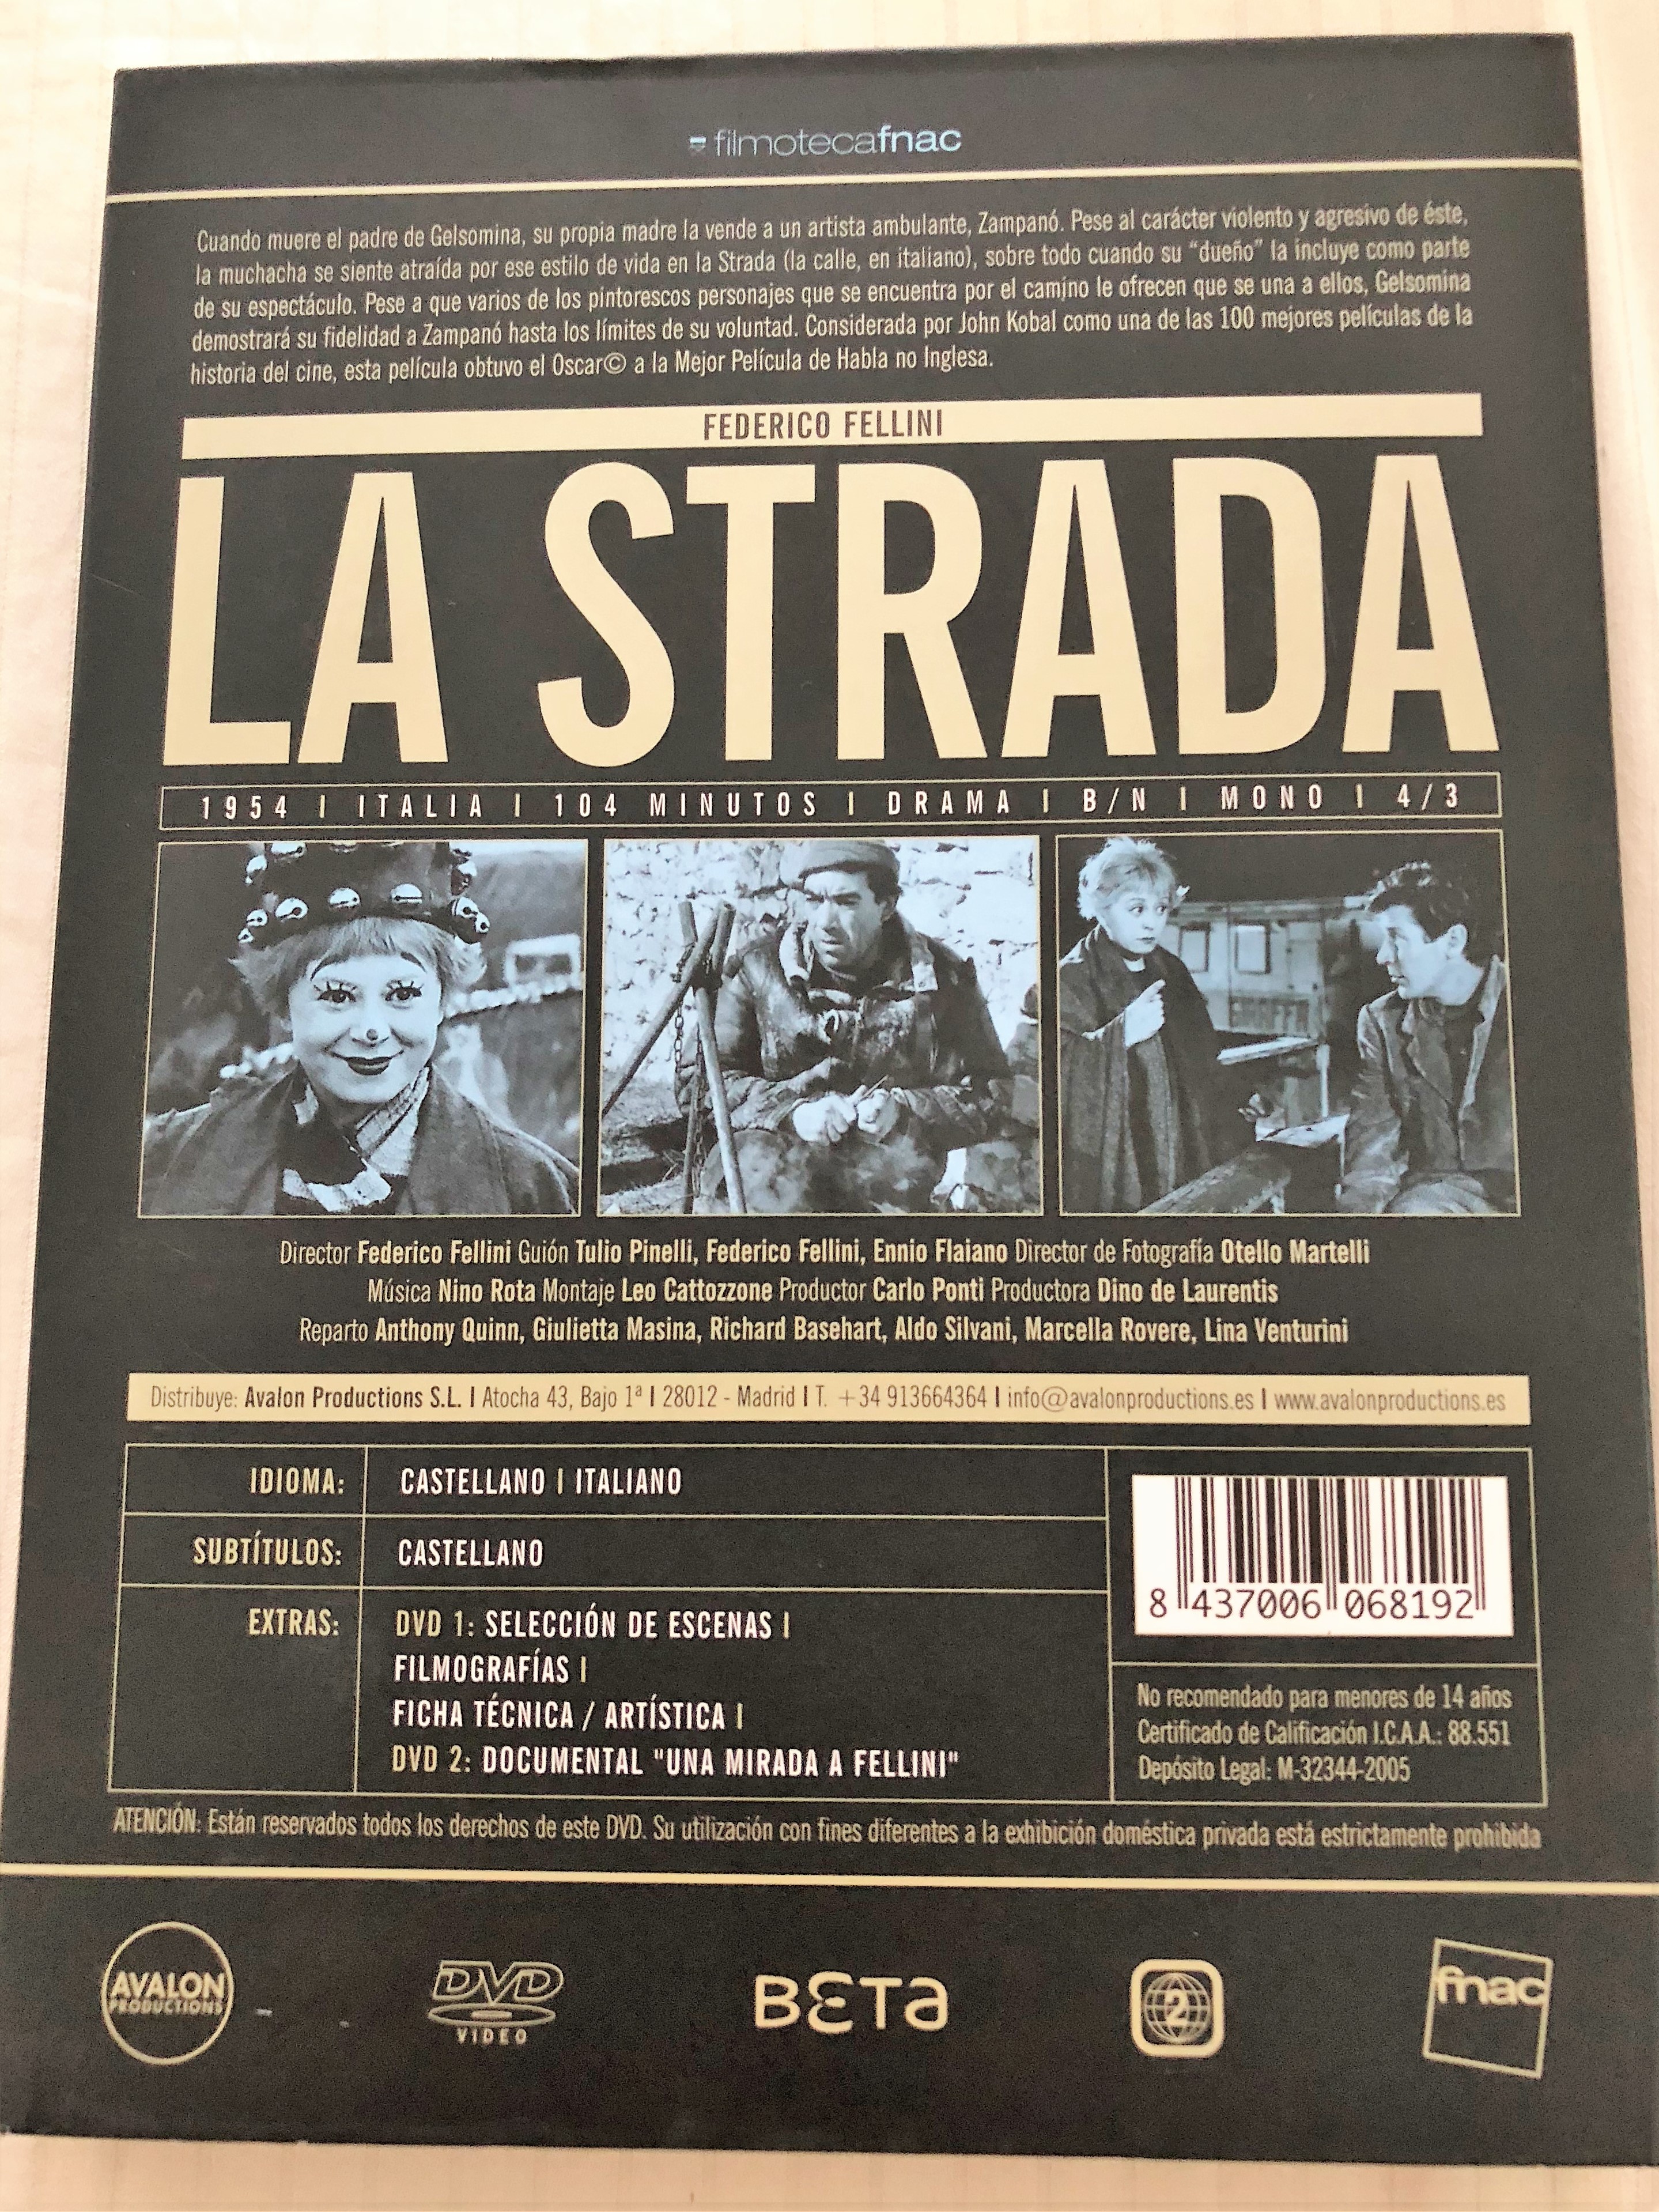 La Strada 2x DVD 1954 The Road / Directed by Federico Fellini / Starring:  Giulietta Masina, Anthony Quinn, Richard Basehart / Spanish DVD Release -  bibleinmylanguage